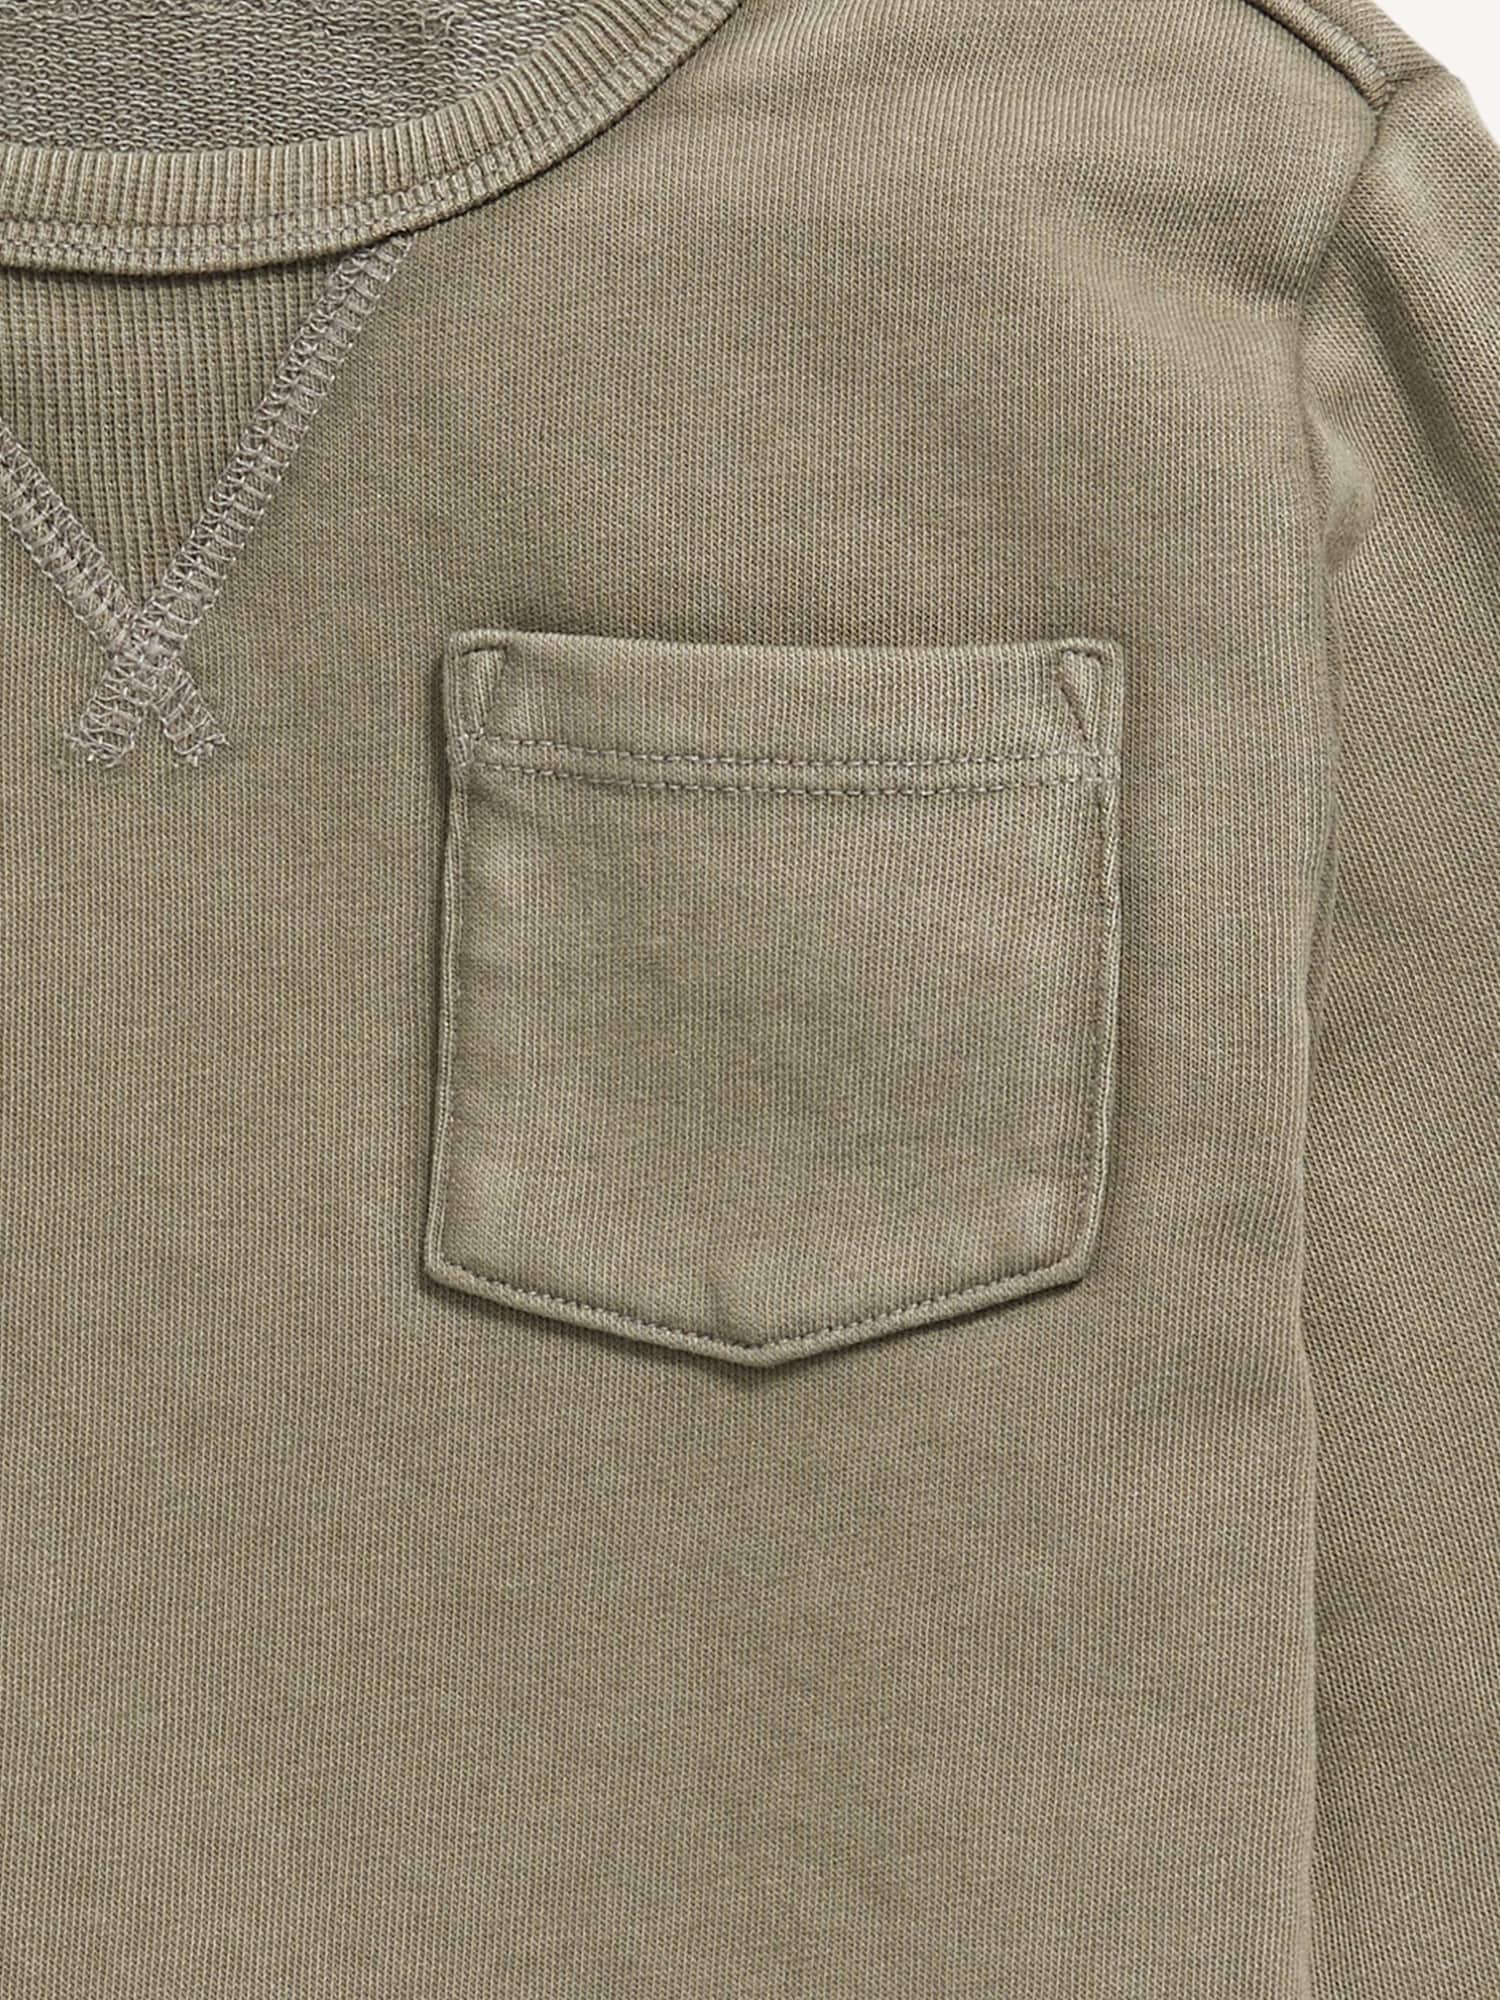 Unisex Long-Sleeve Pocket Sweatshirt for Toddler | Old Navy